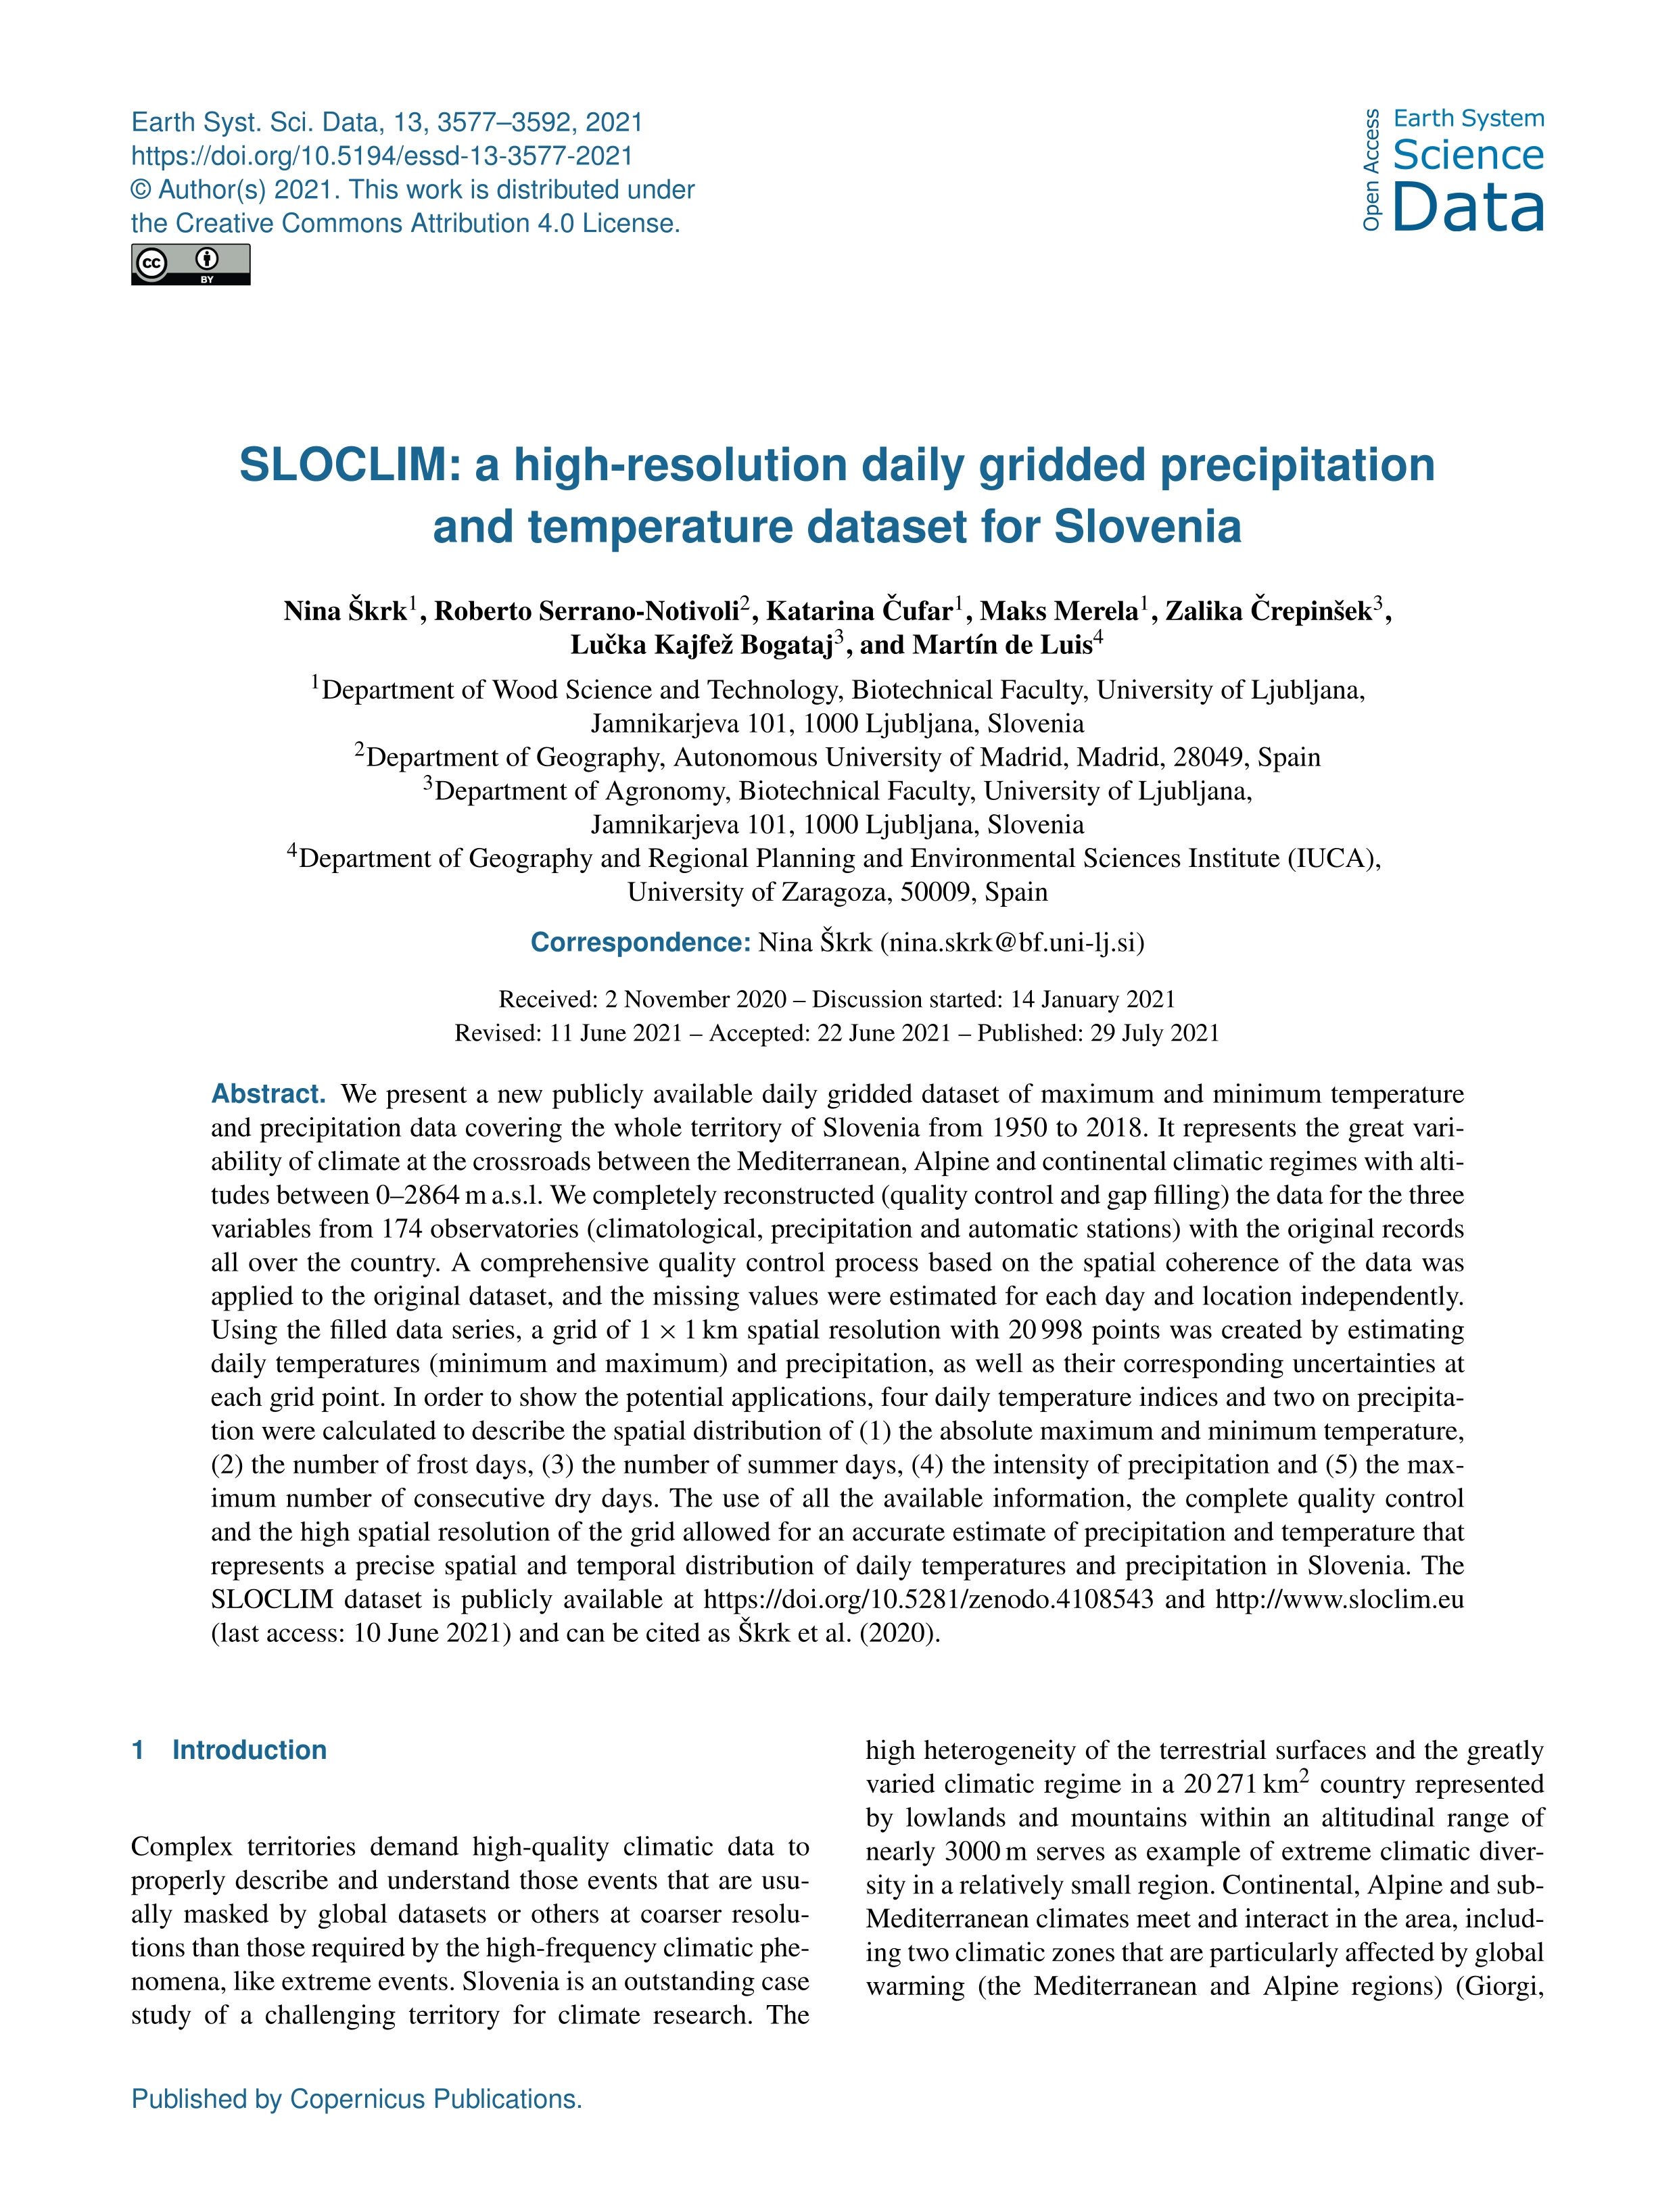 SLOCLIM: a high-resolution daily gridded precipitation and temperature dataset for Slovenia